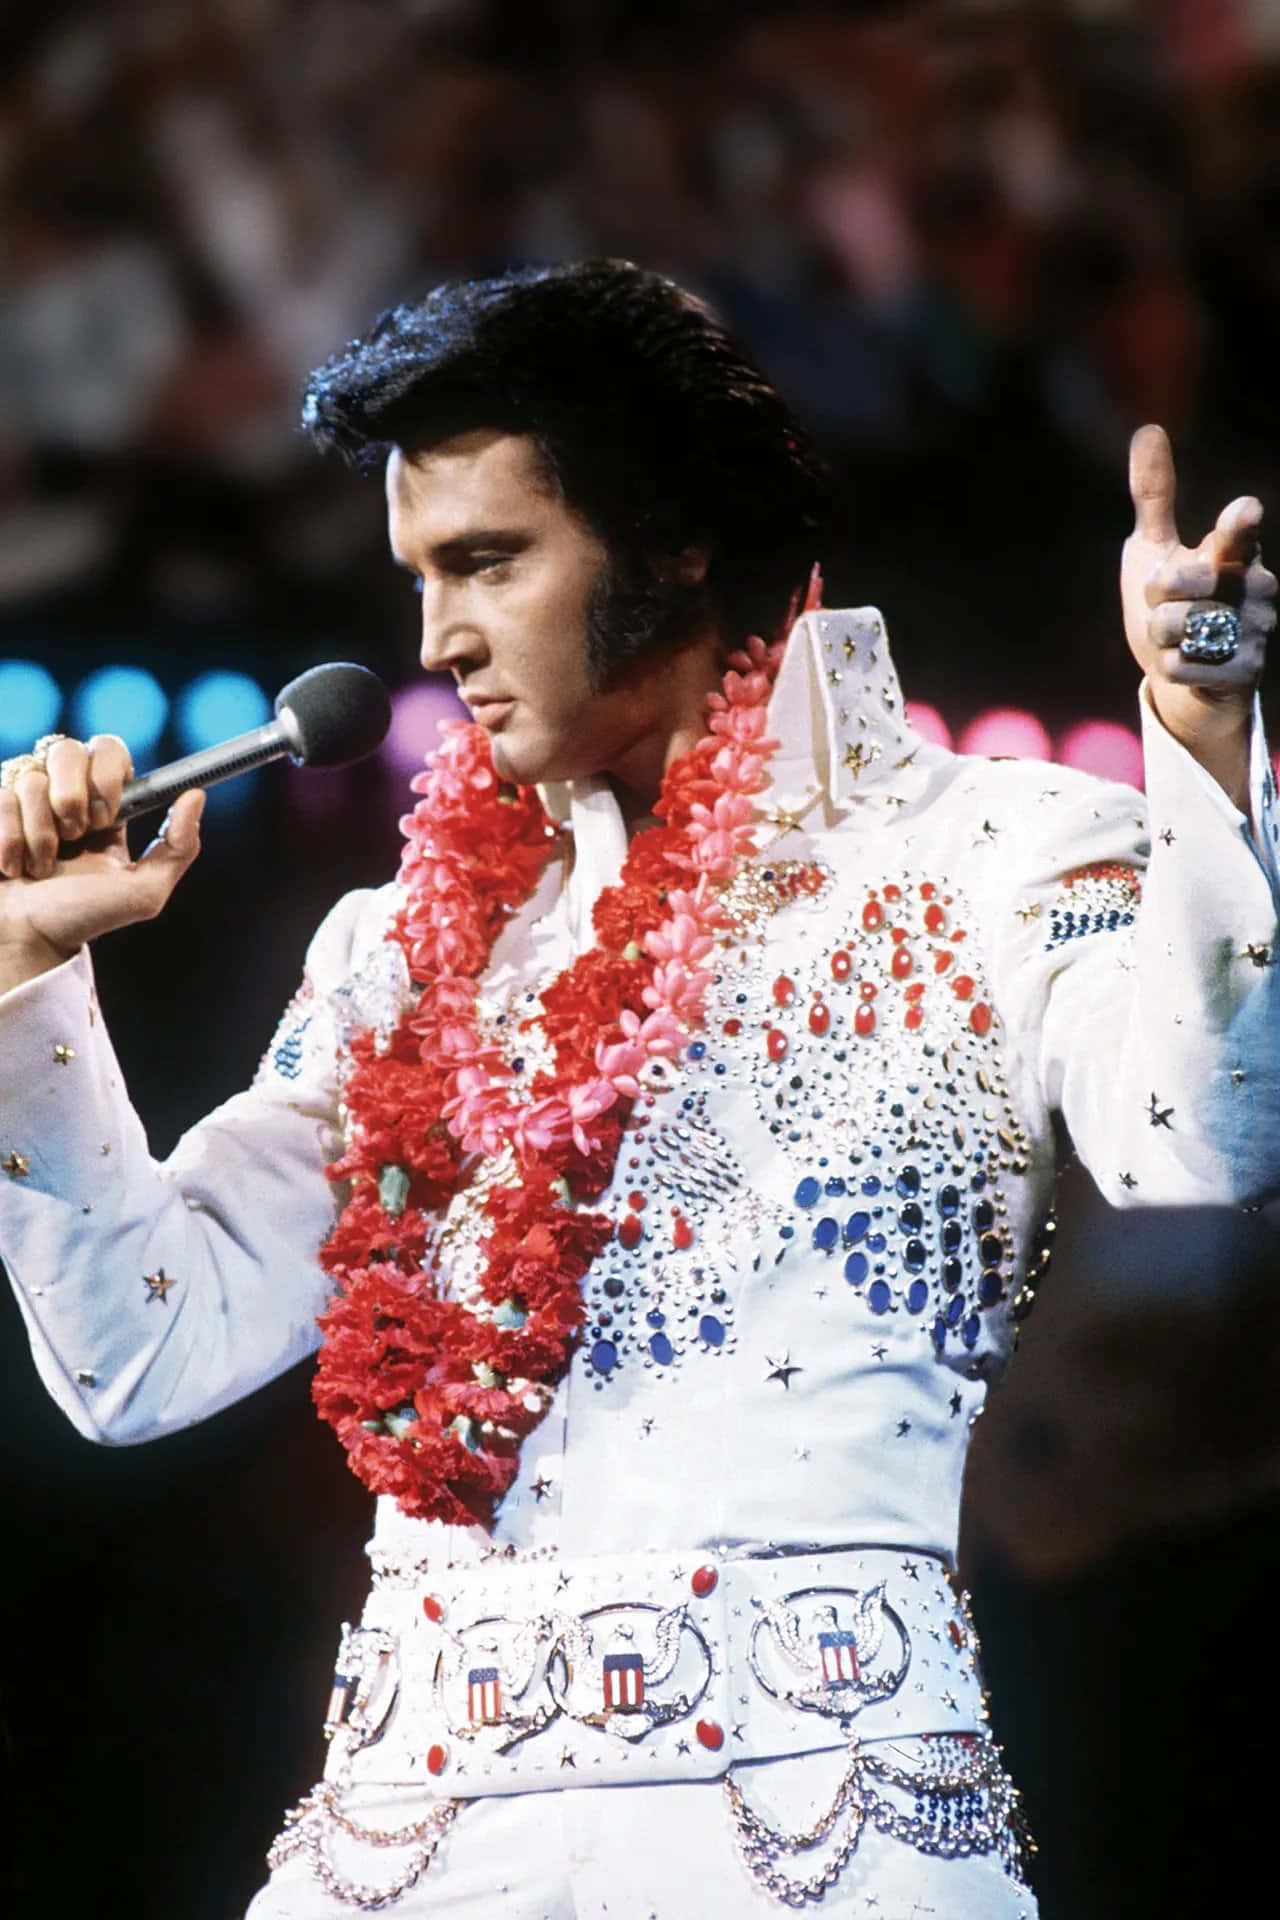 Elvis Presley in his signature Rock 'N' Roll style